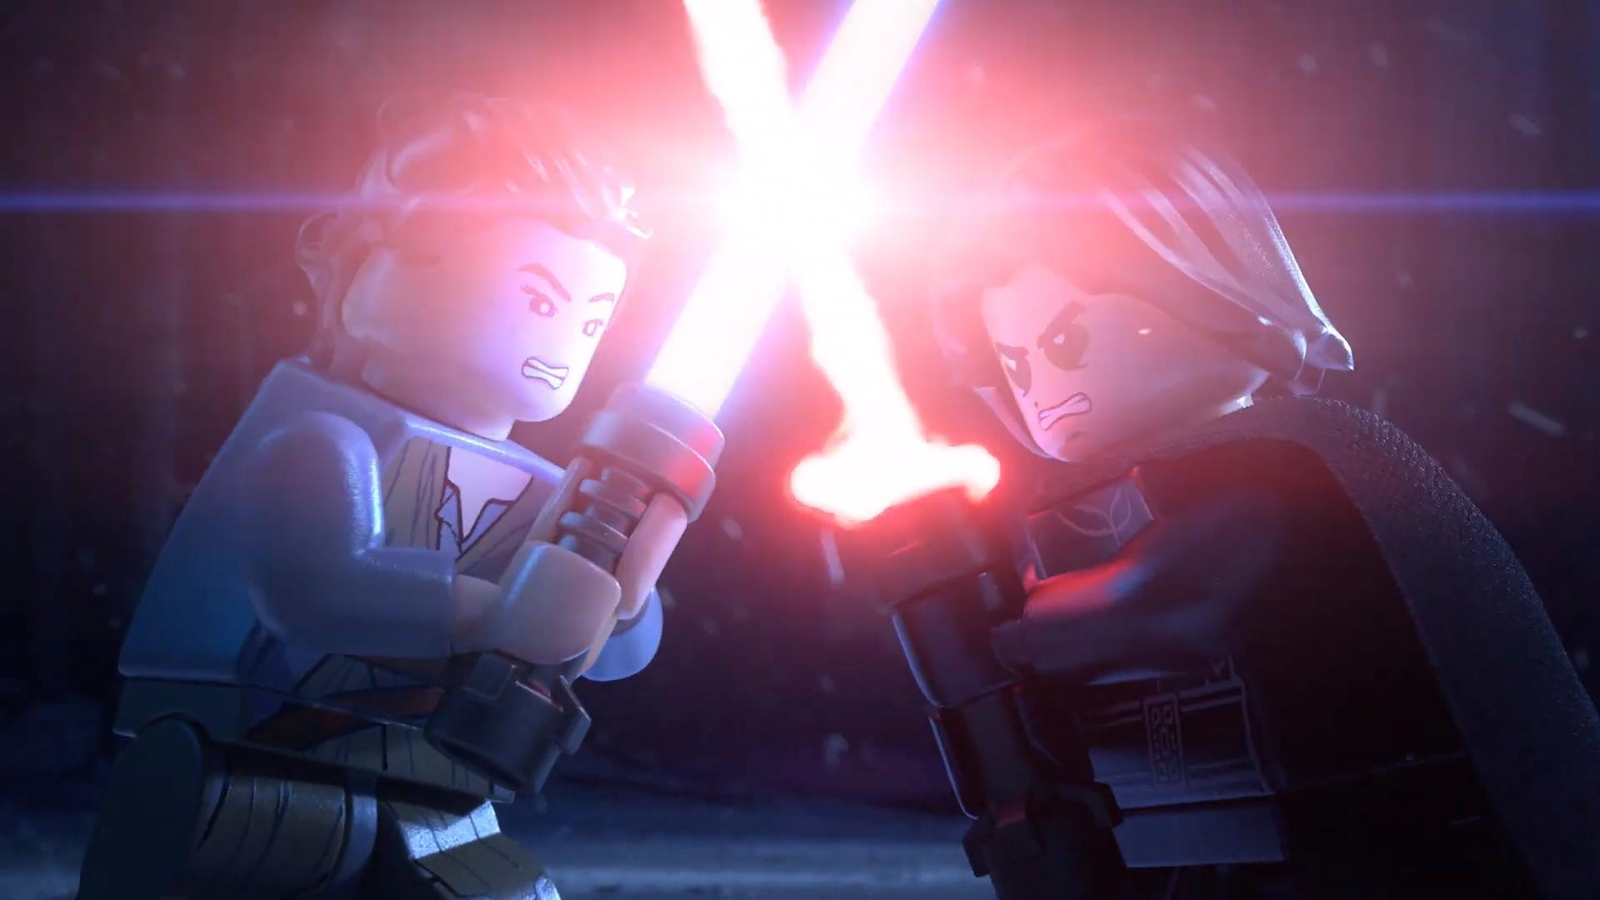 E3 2019: LEGO Star Wars: The Skywalker Saga Coming in 2020